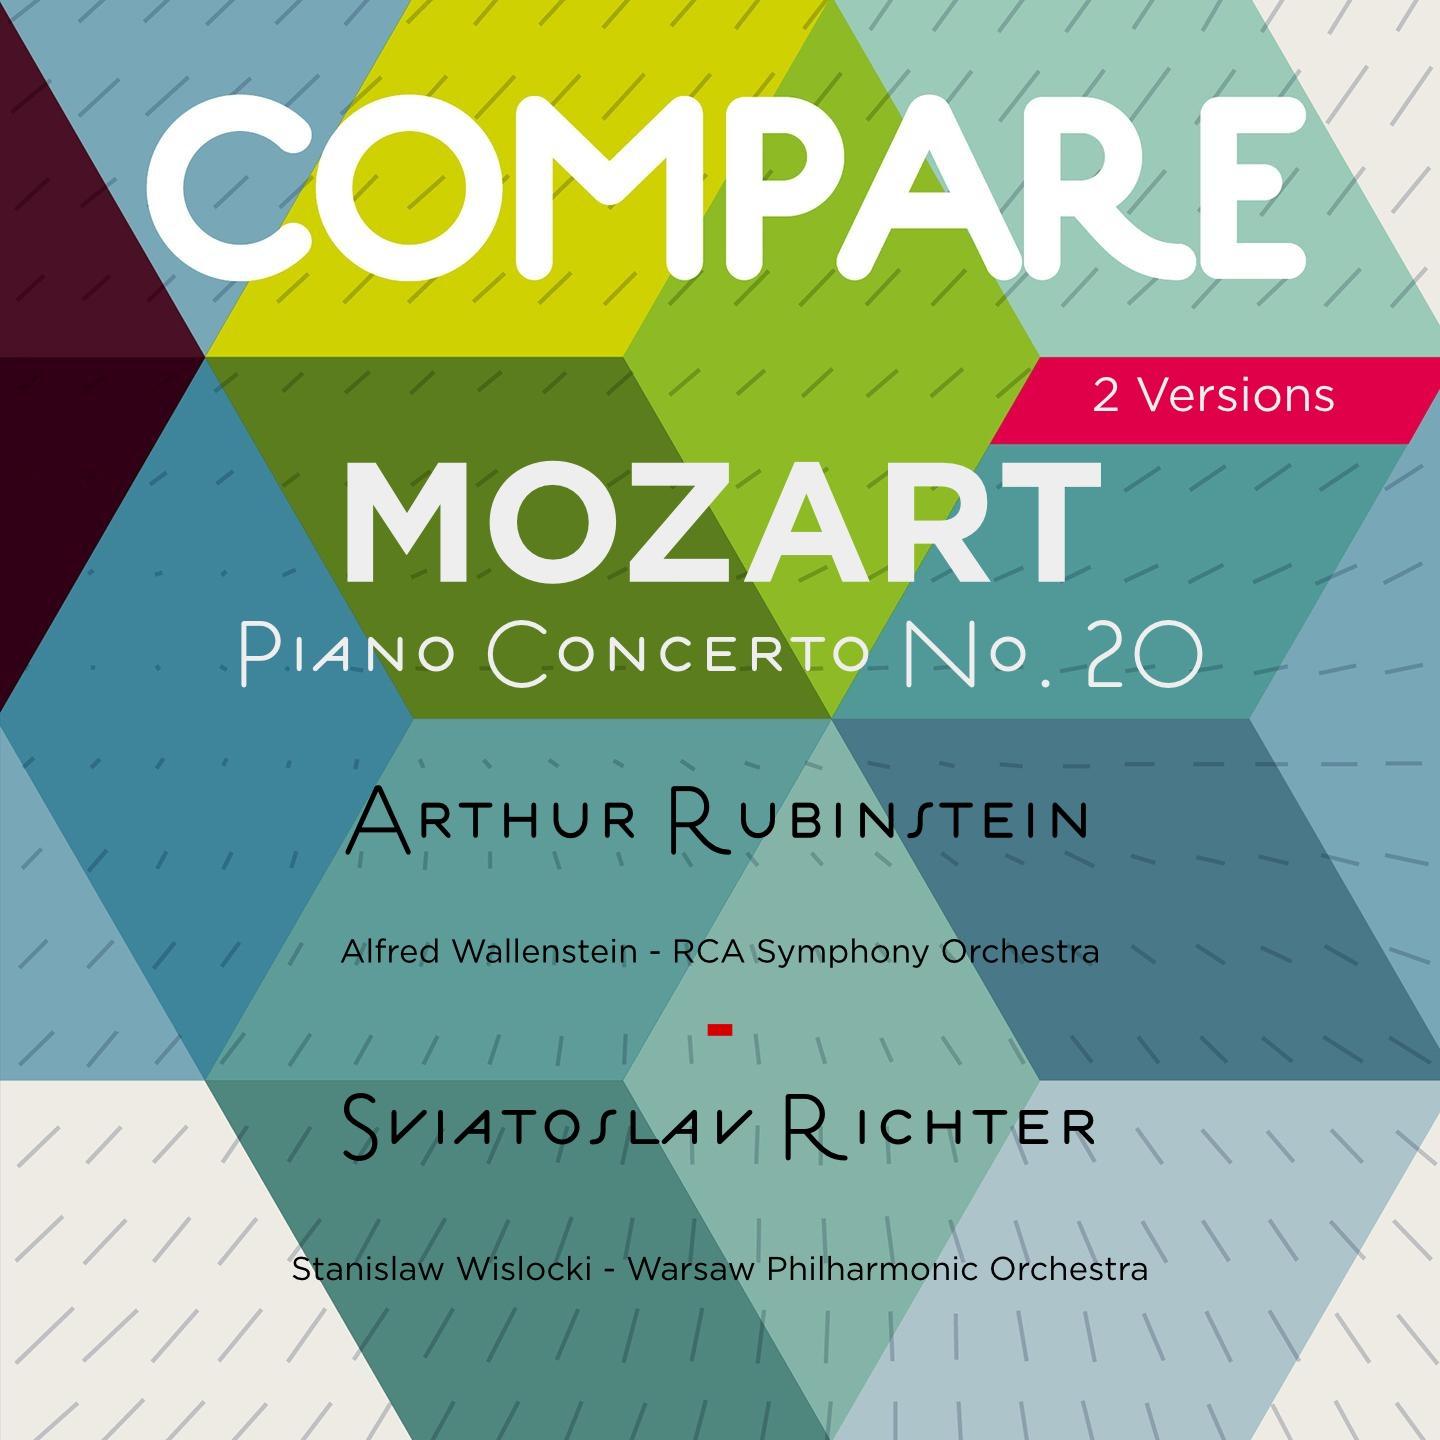 Mozart: Piano Concerto No. 20, Arthur Rubinstein vs. Sviatoslav Richter